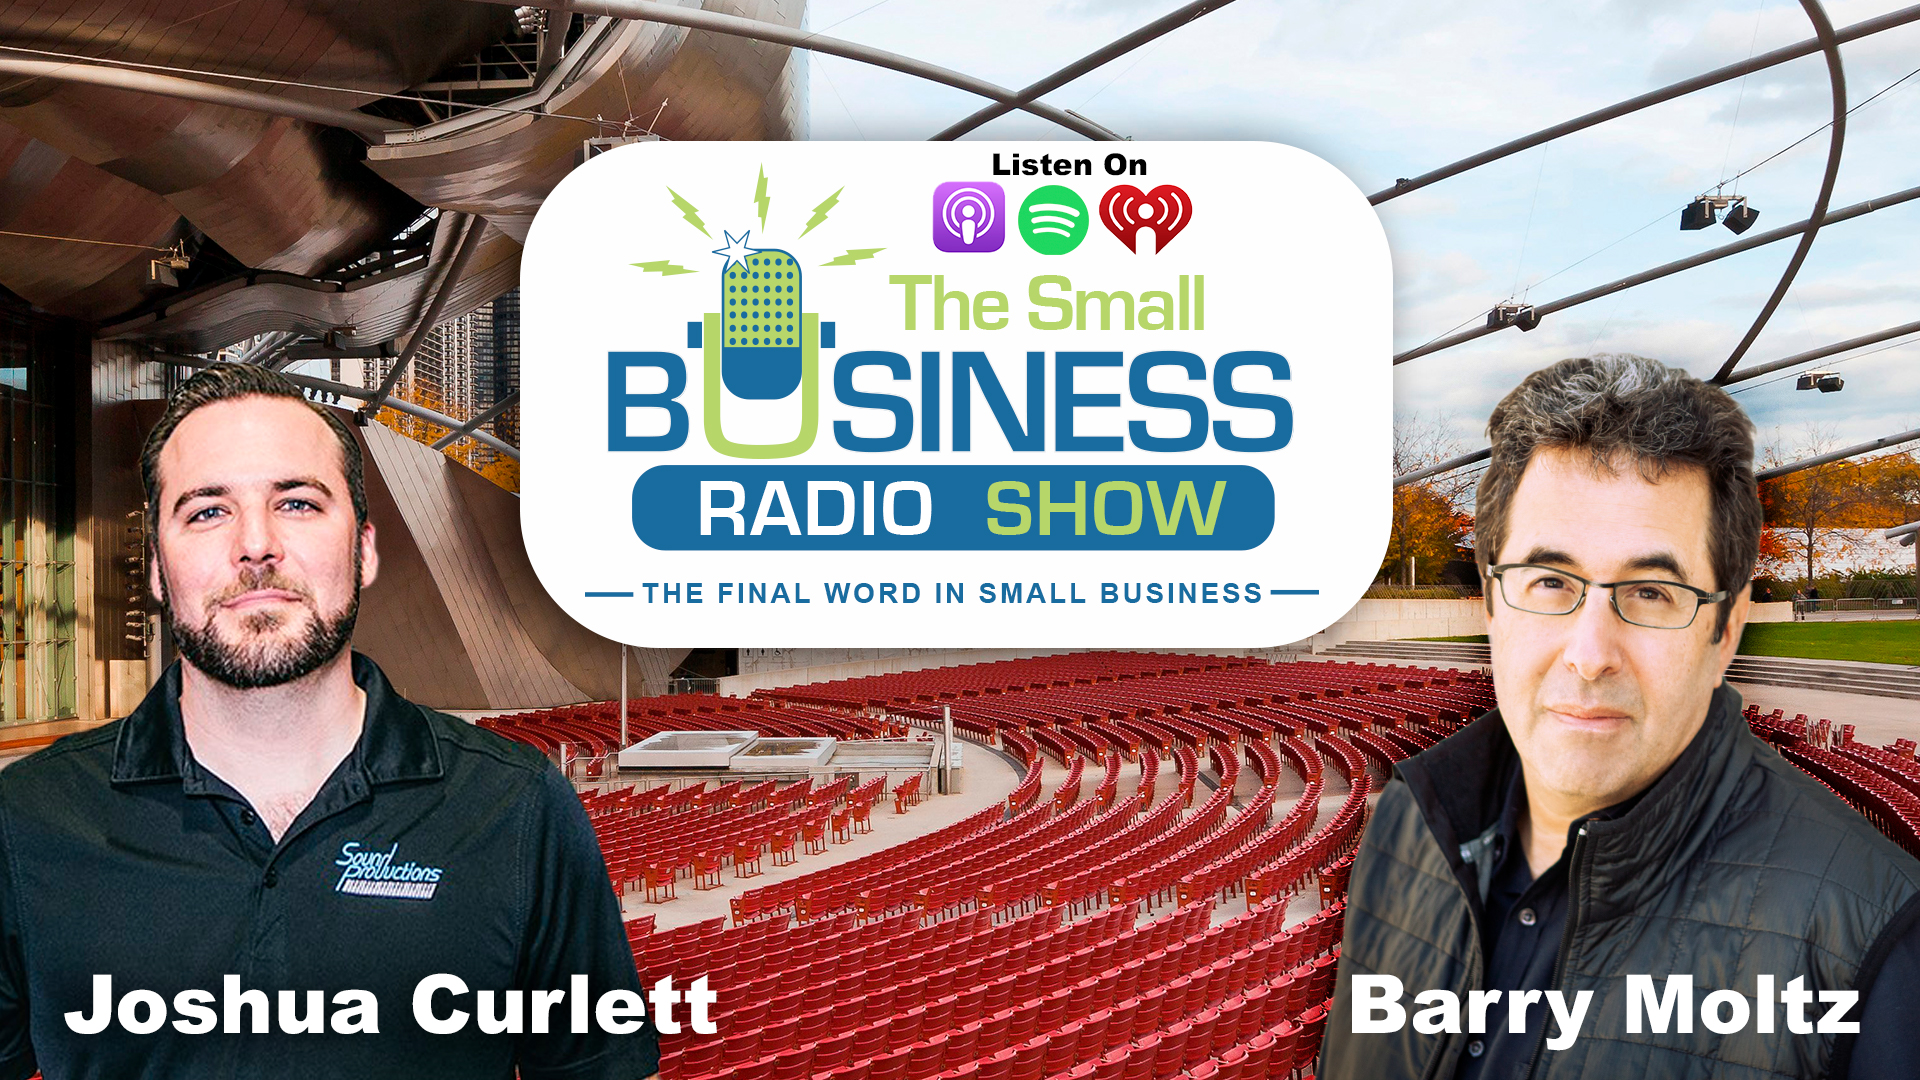 Joshua Curlett on The Small Business Radio Show